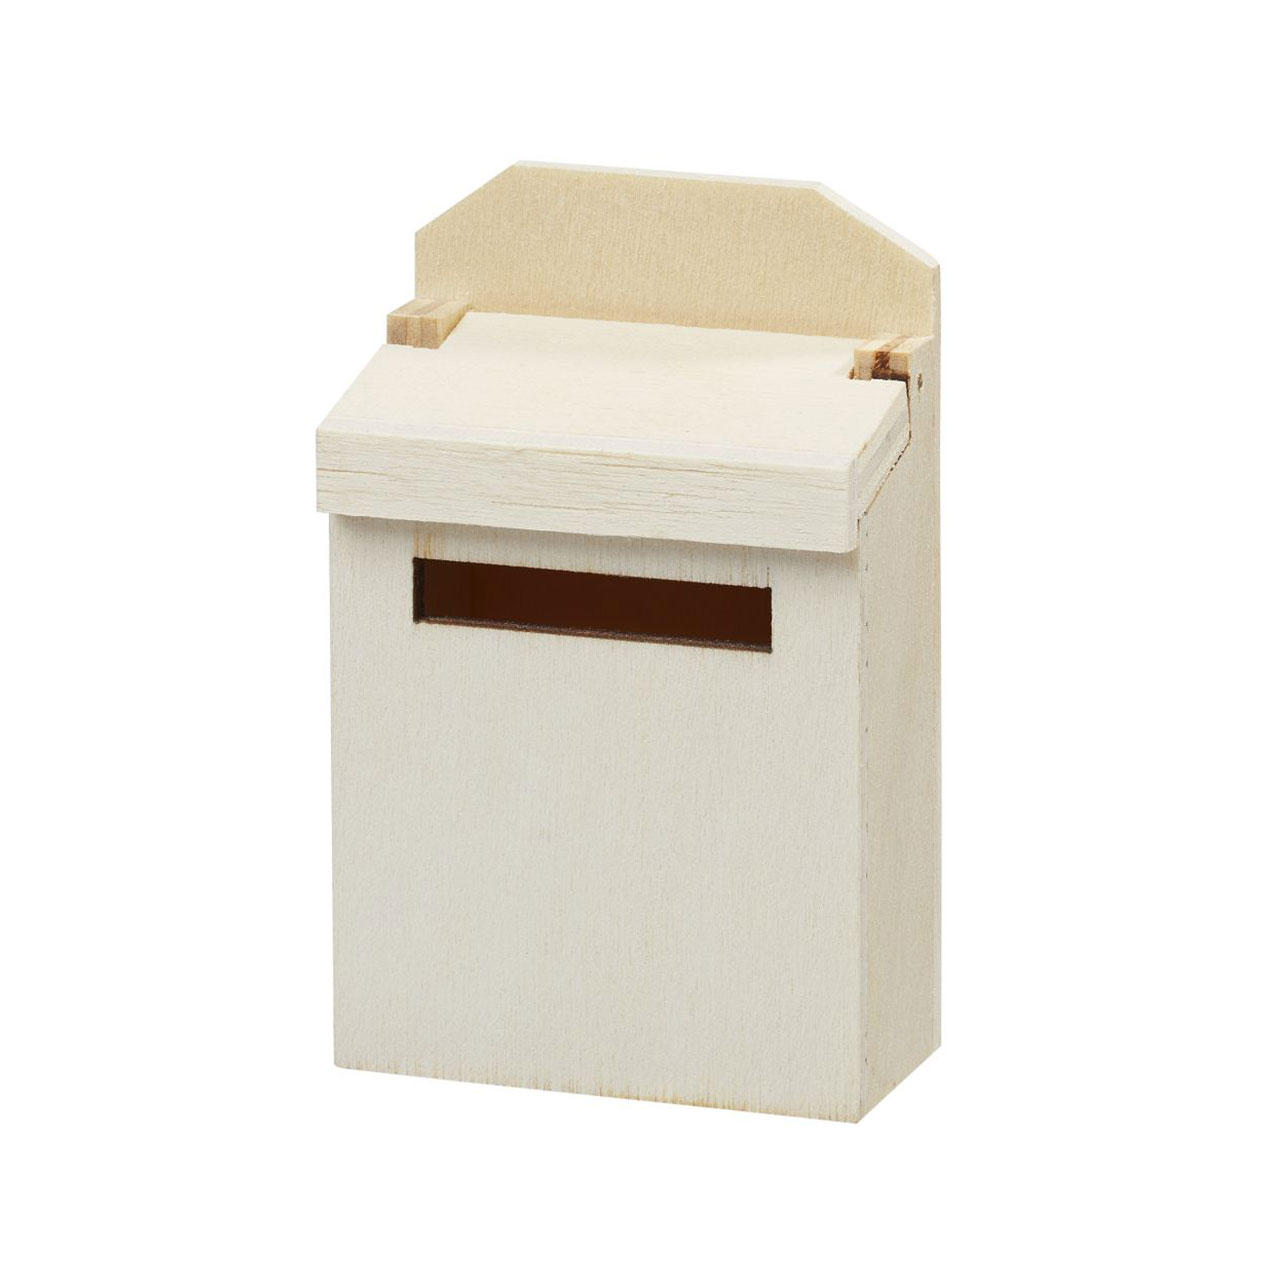 Minature Wooden Post Box - Natural